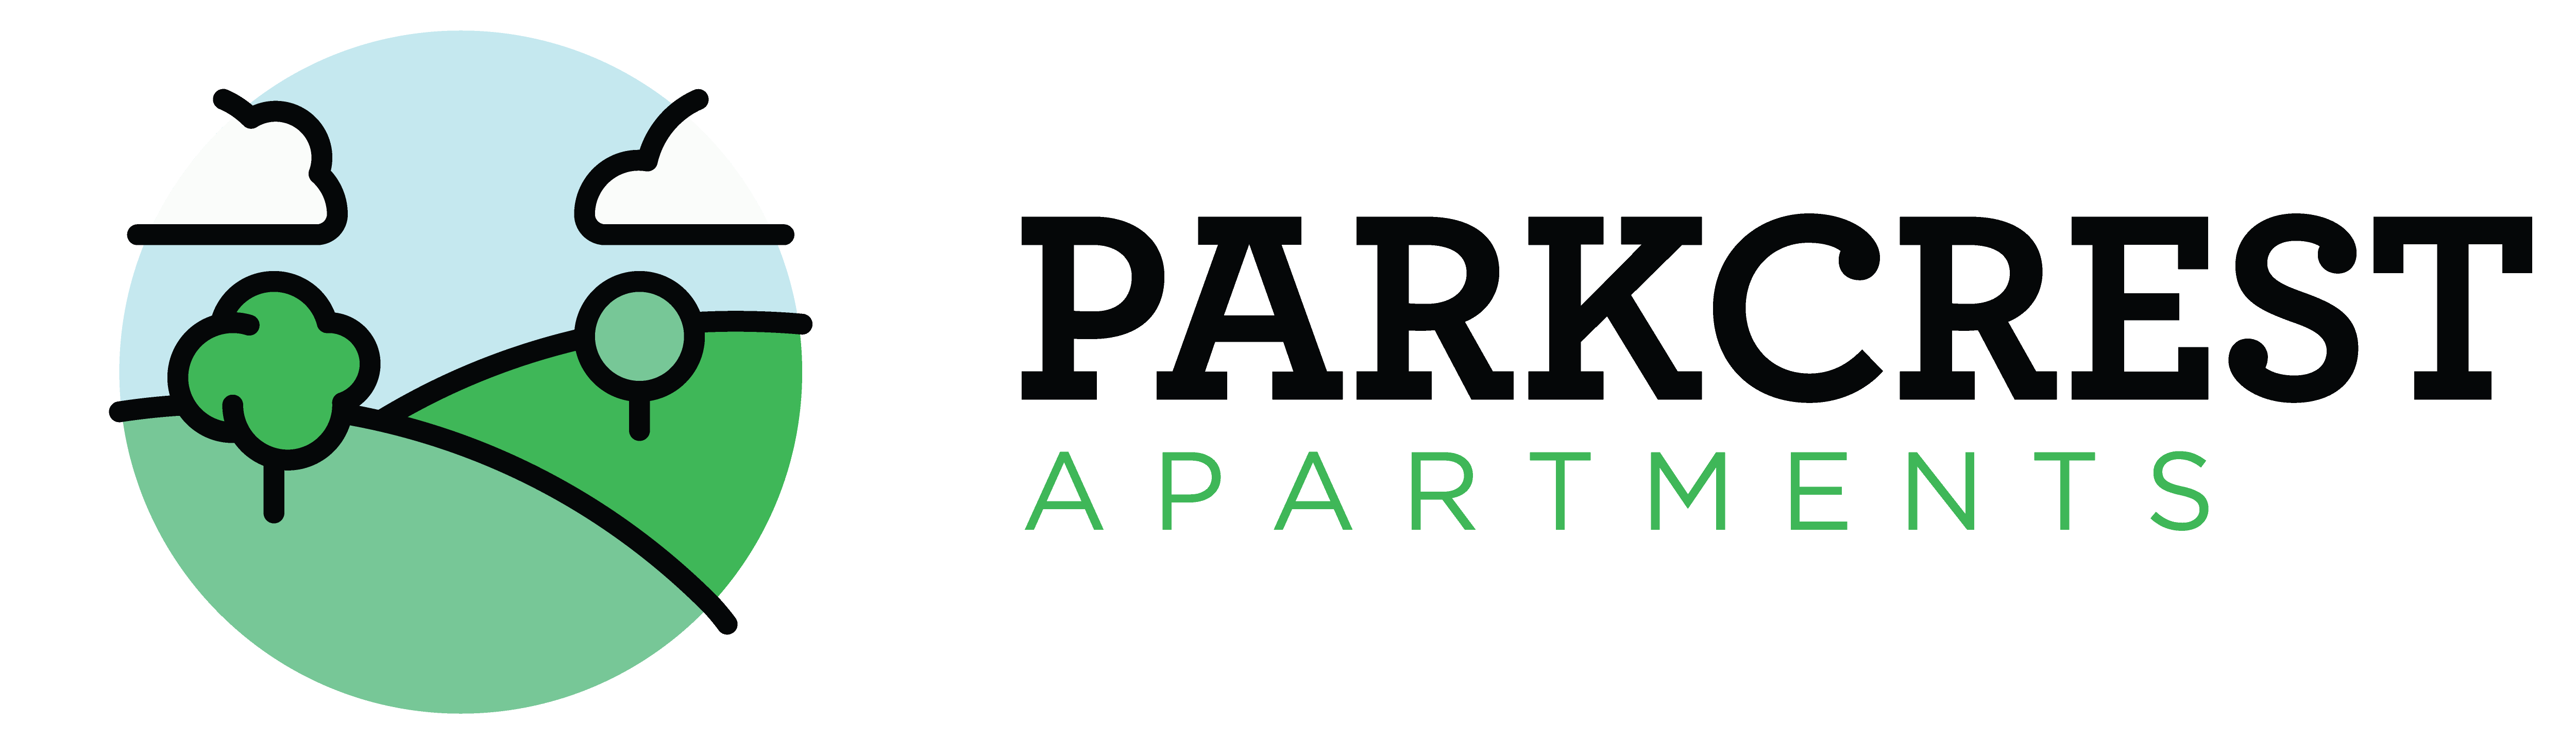 Parkcrest Apartments